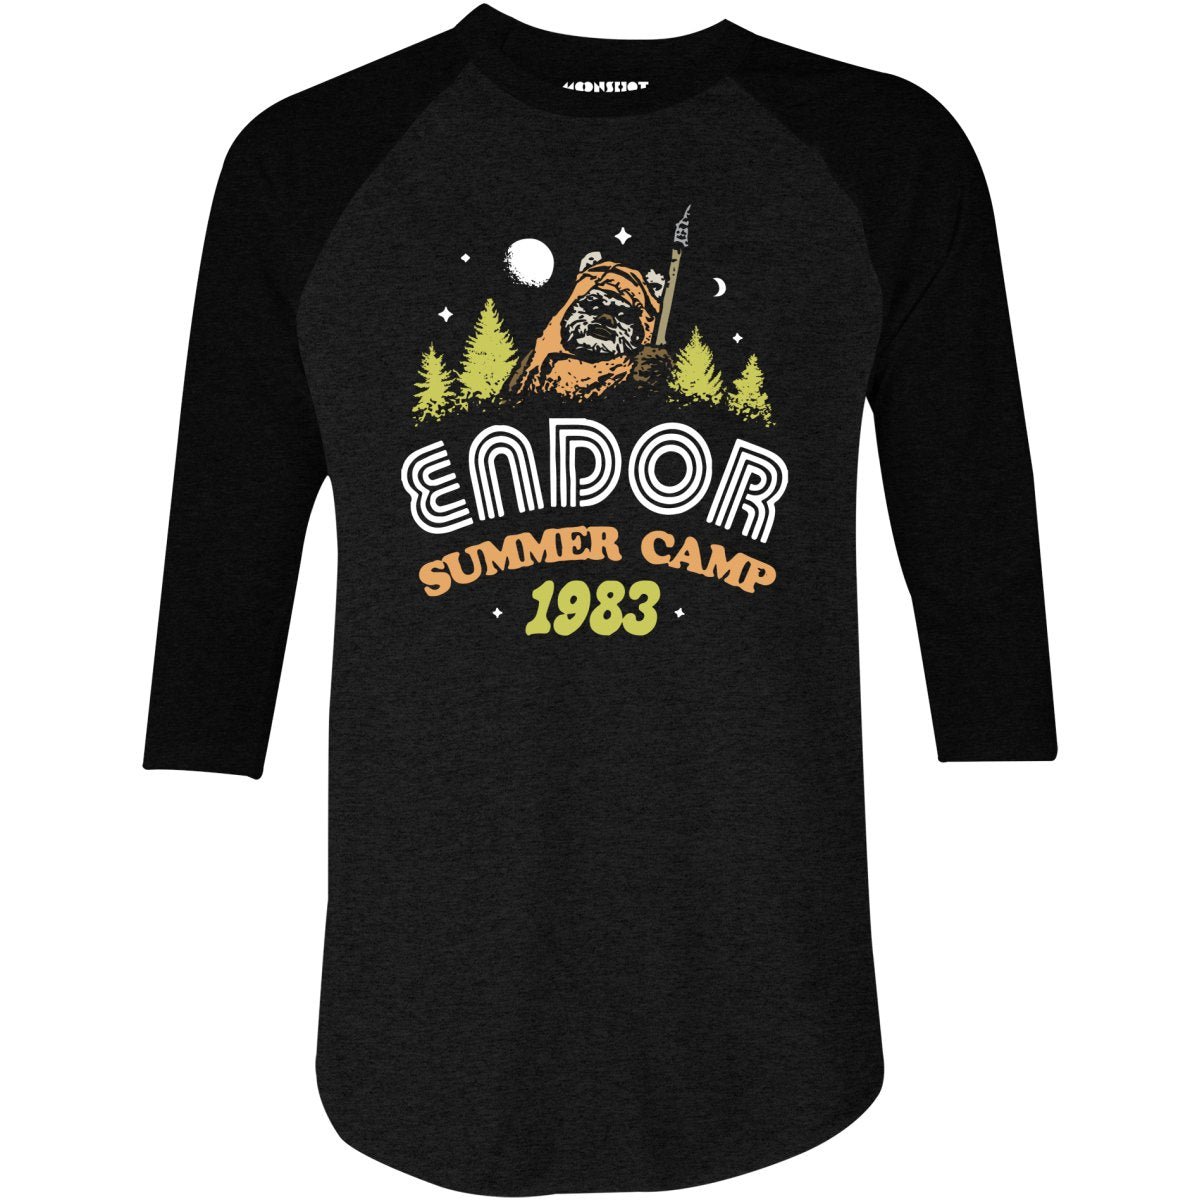 Endor Summer Camp - 3/4 Sleeve Raglan T-Shirt